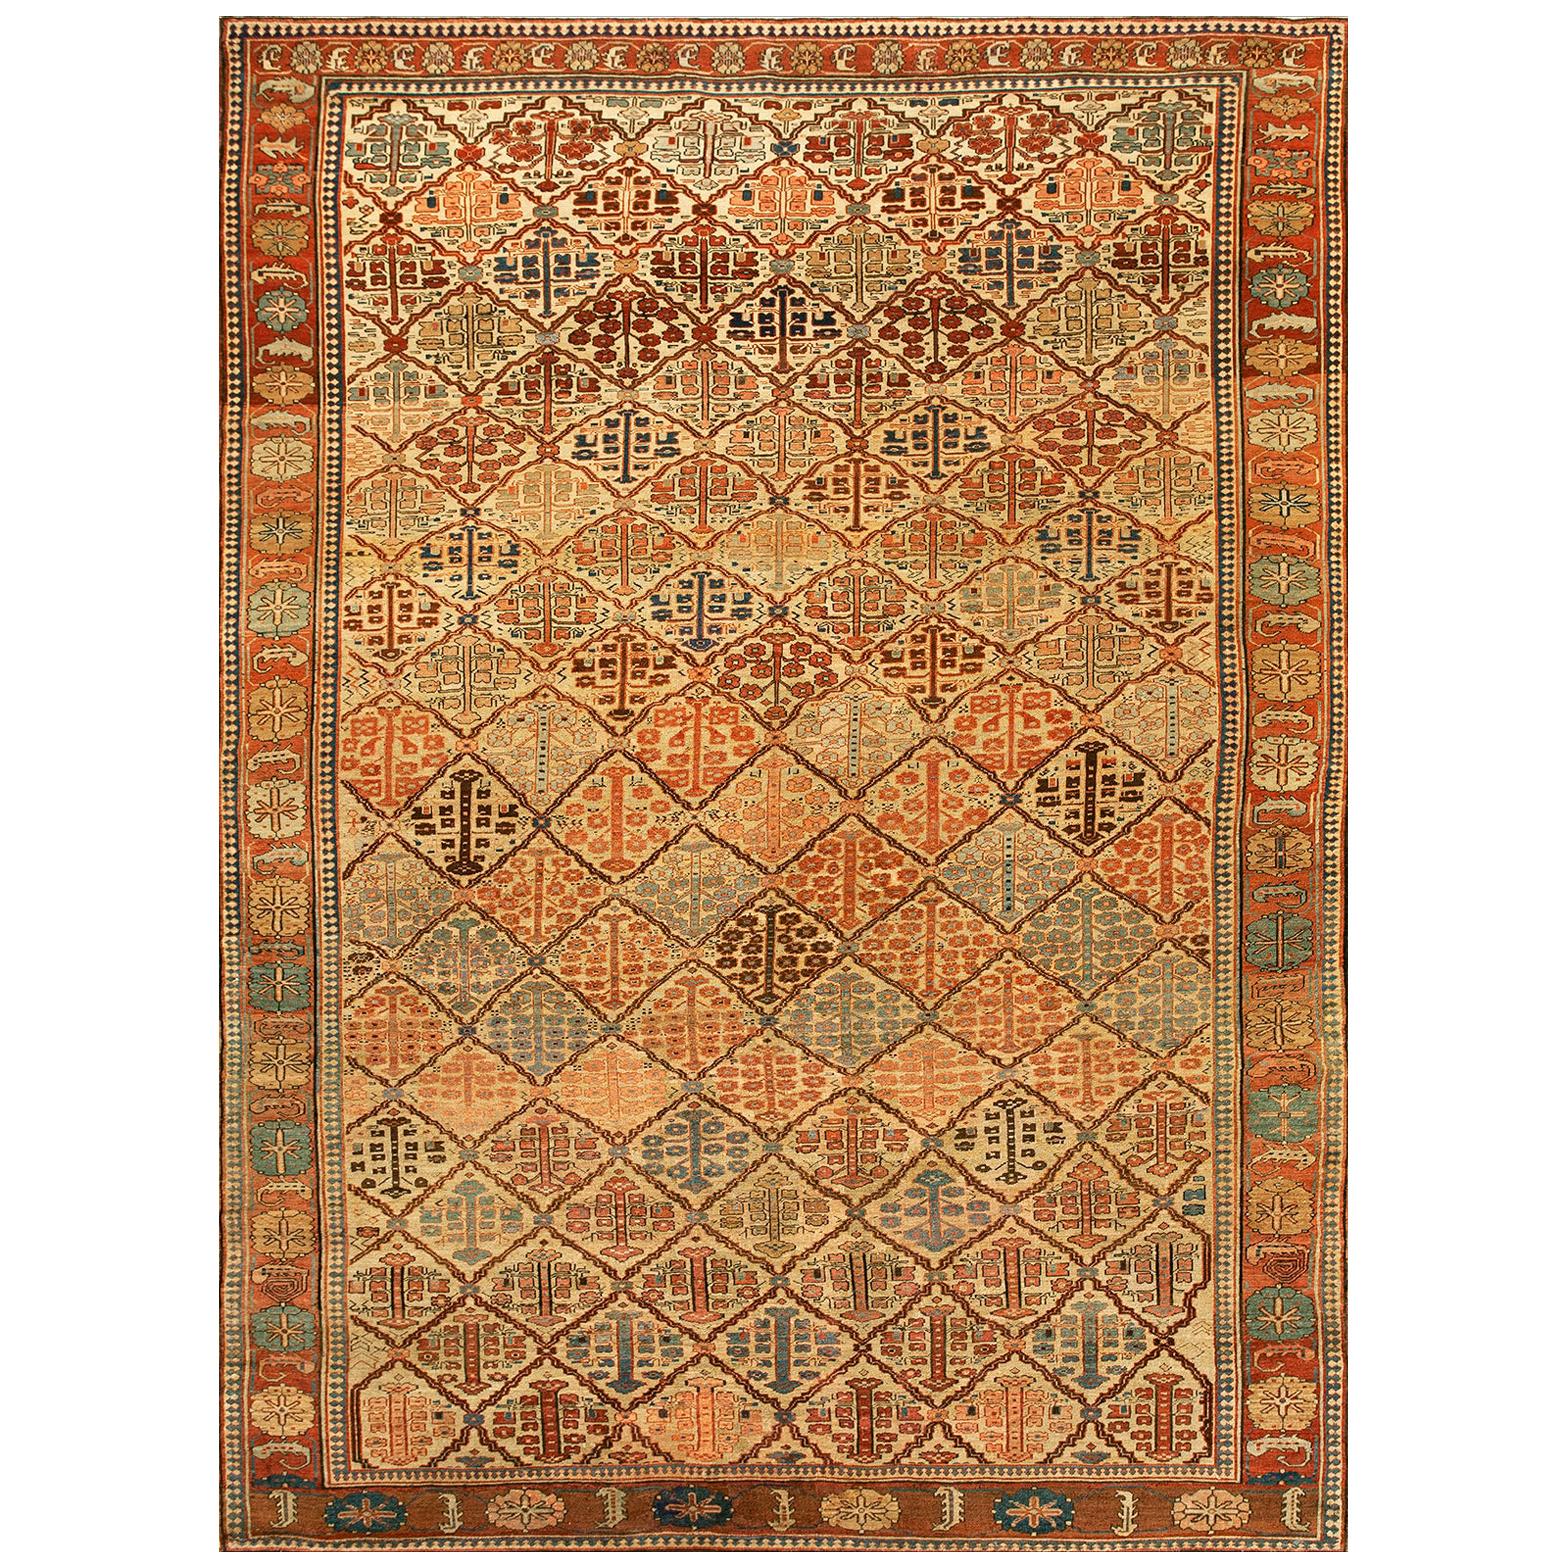 19th Century N.W. Persian Bakshaiesh Carpet ( 9' x 13'2" - 275 x 402 ) For Sale